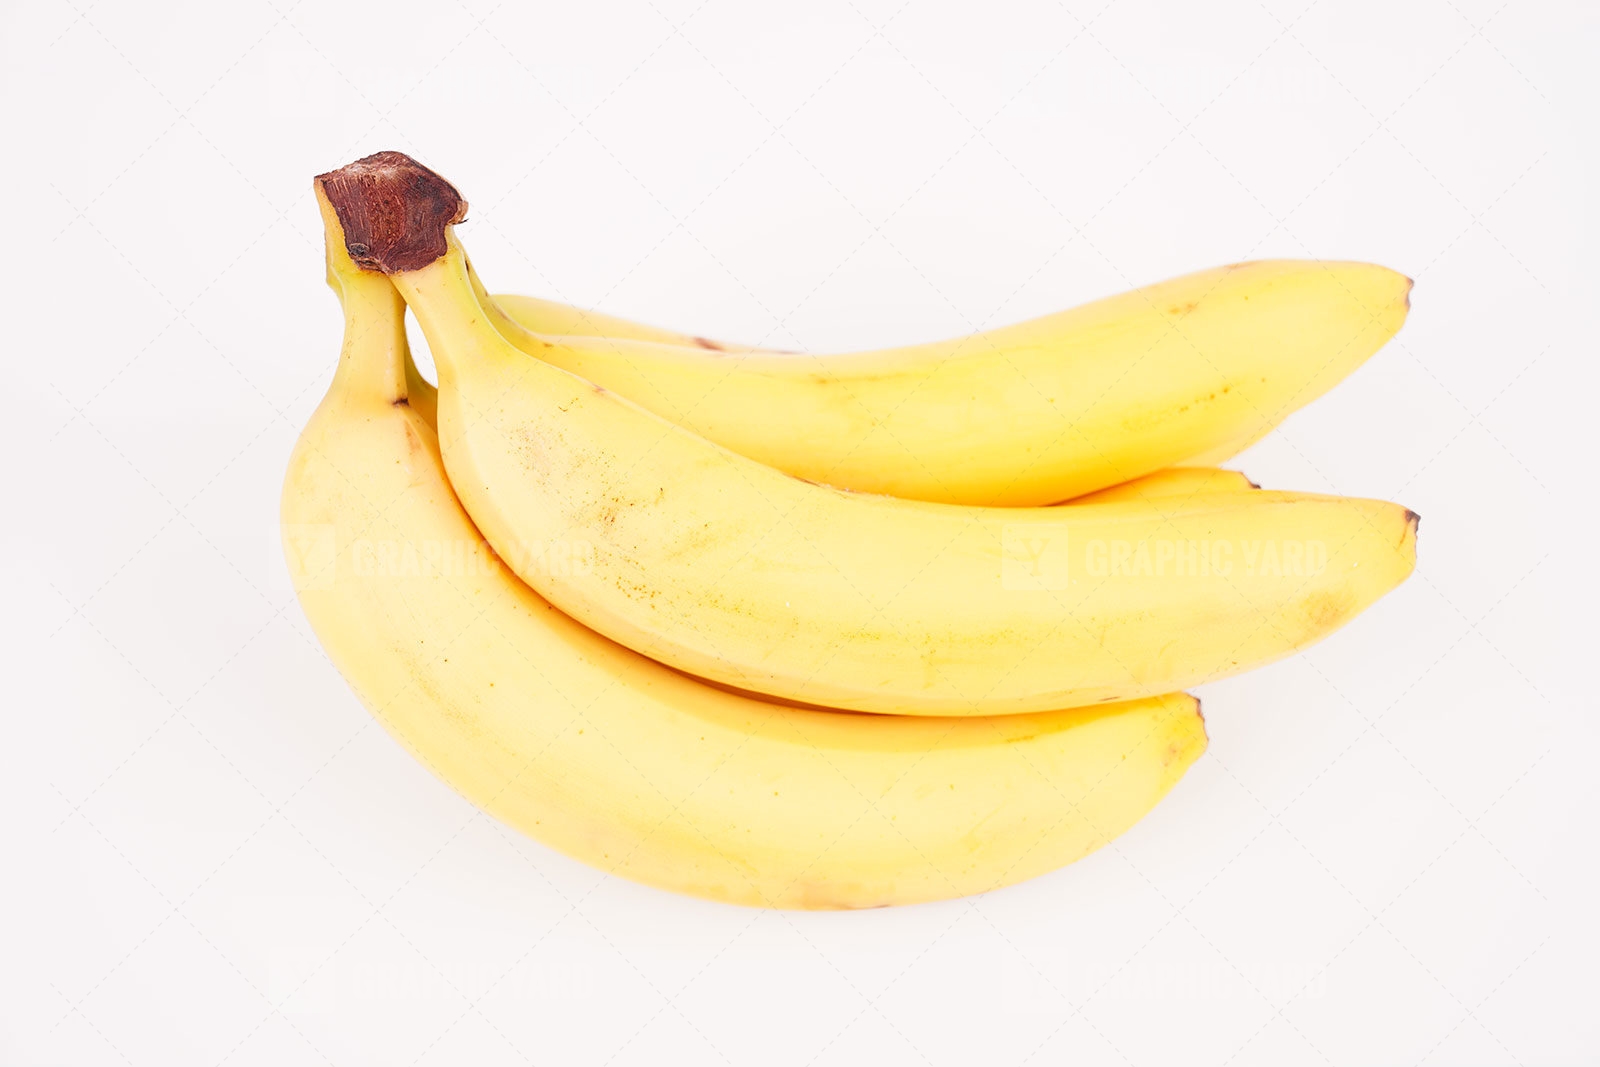 https://graphicyard.com/wp-content/uploads/2020/08/Bunch-of-ripe-bananas.jpg